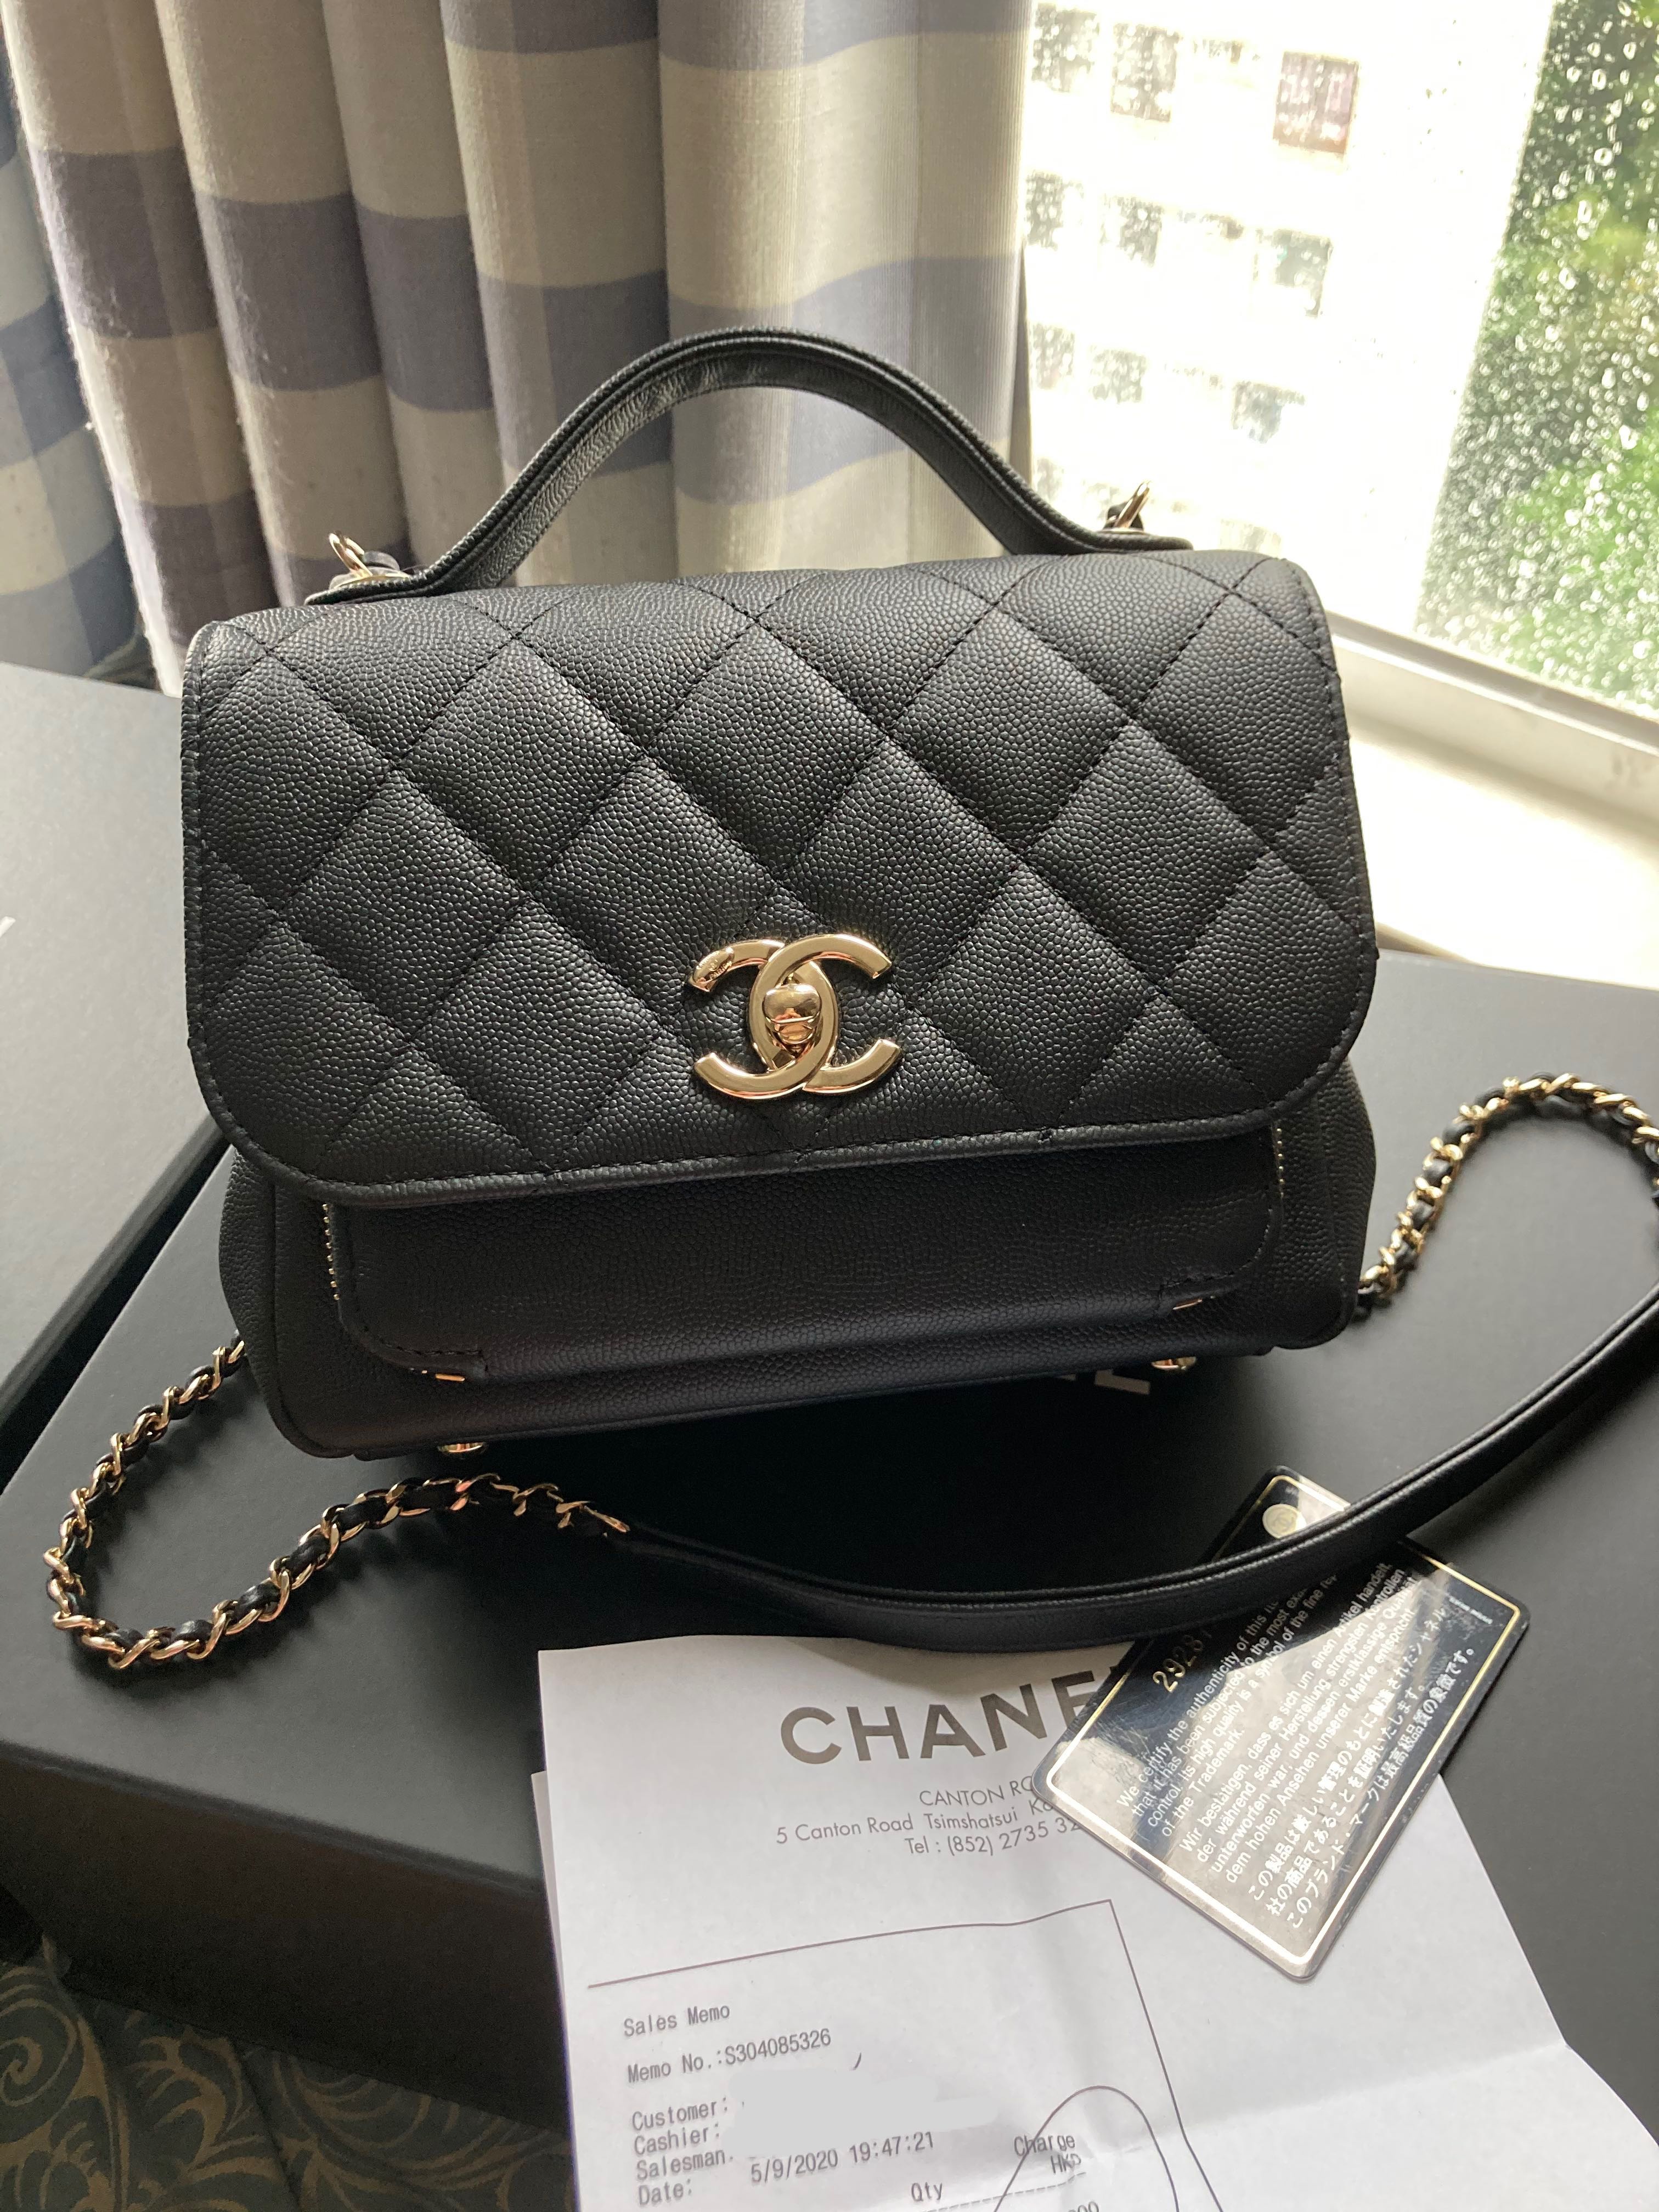 Chanel Business Affinity Bag Review- Chanel's Best Kept Secret